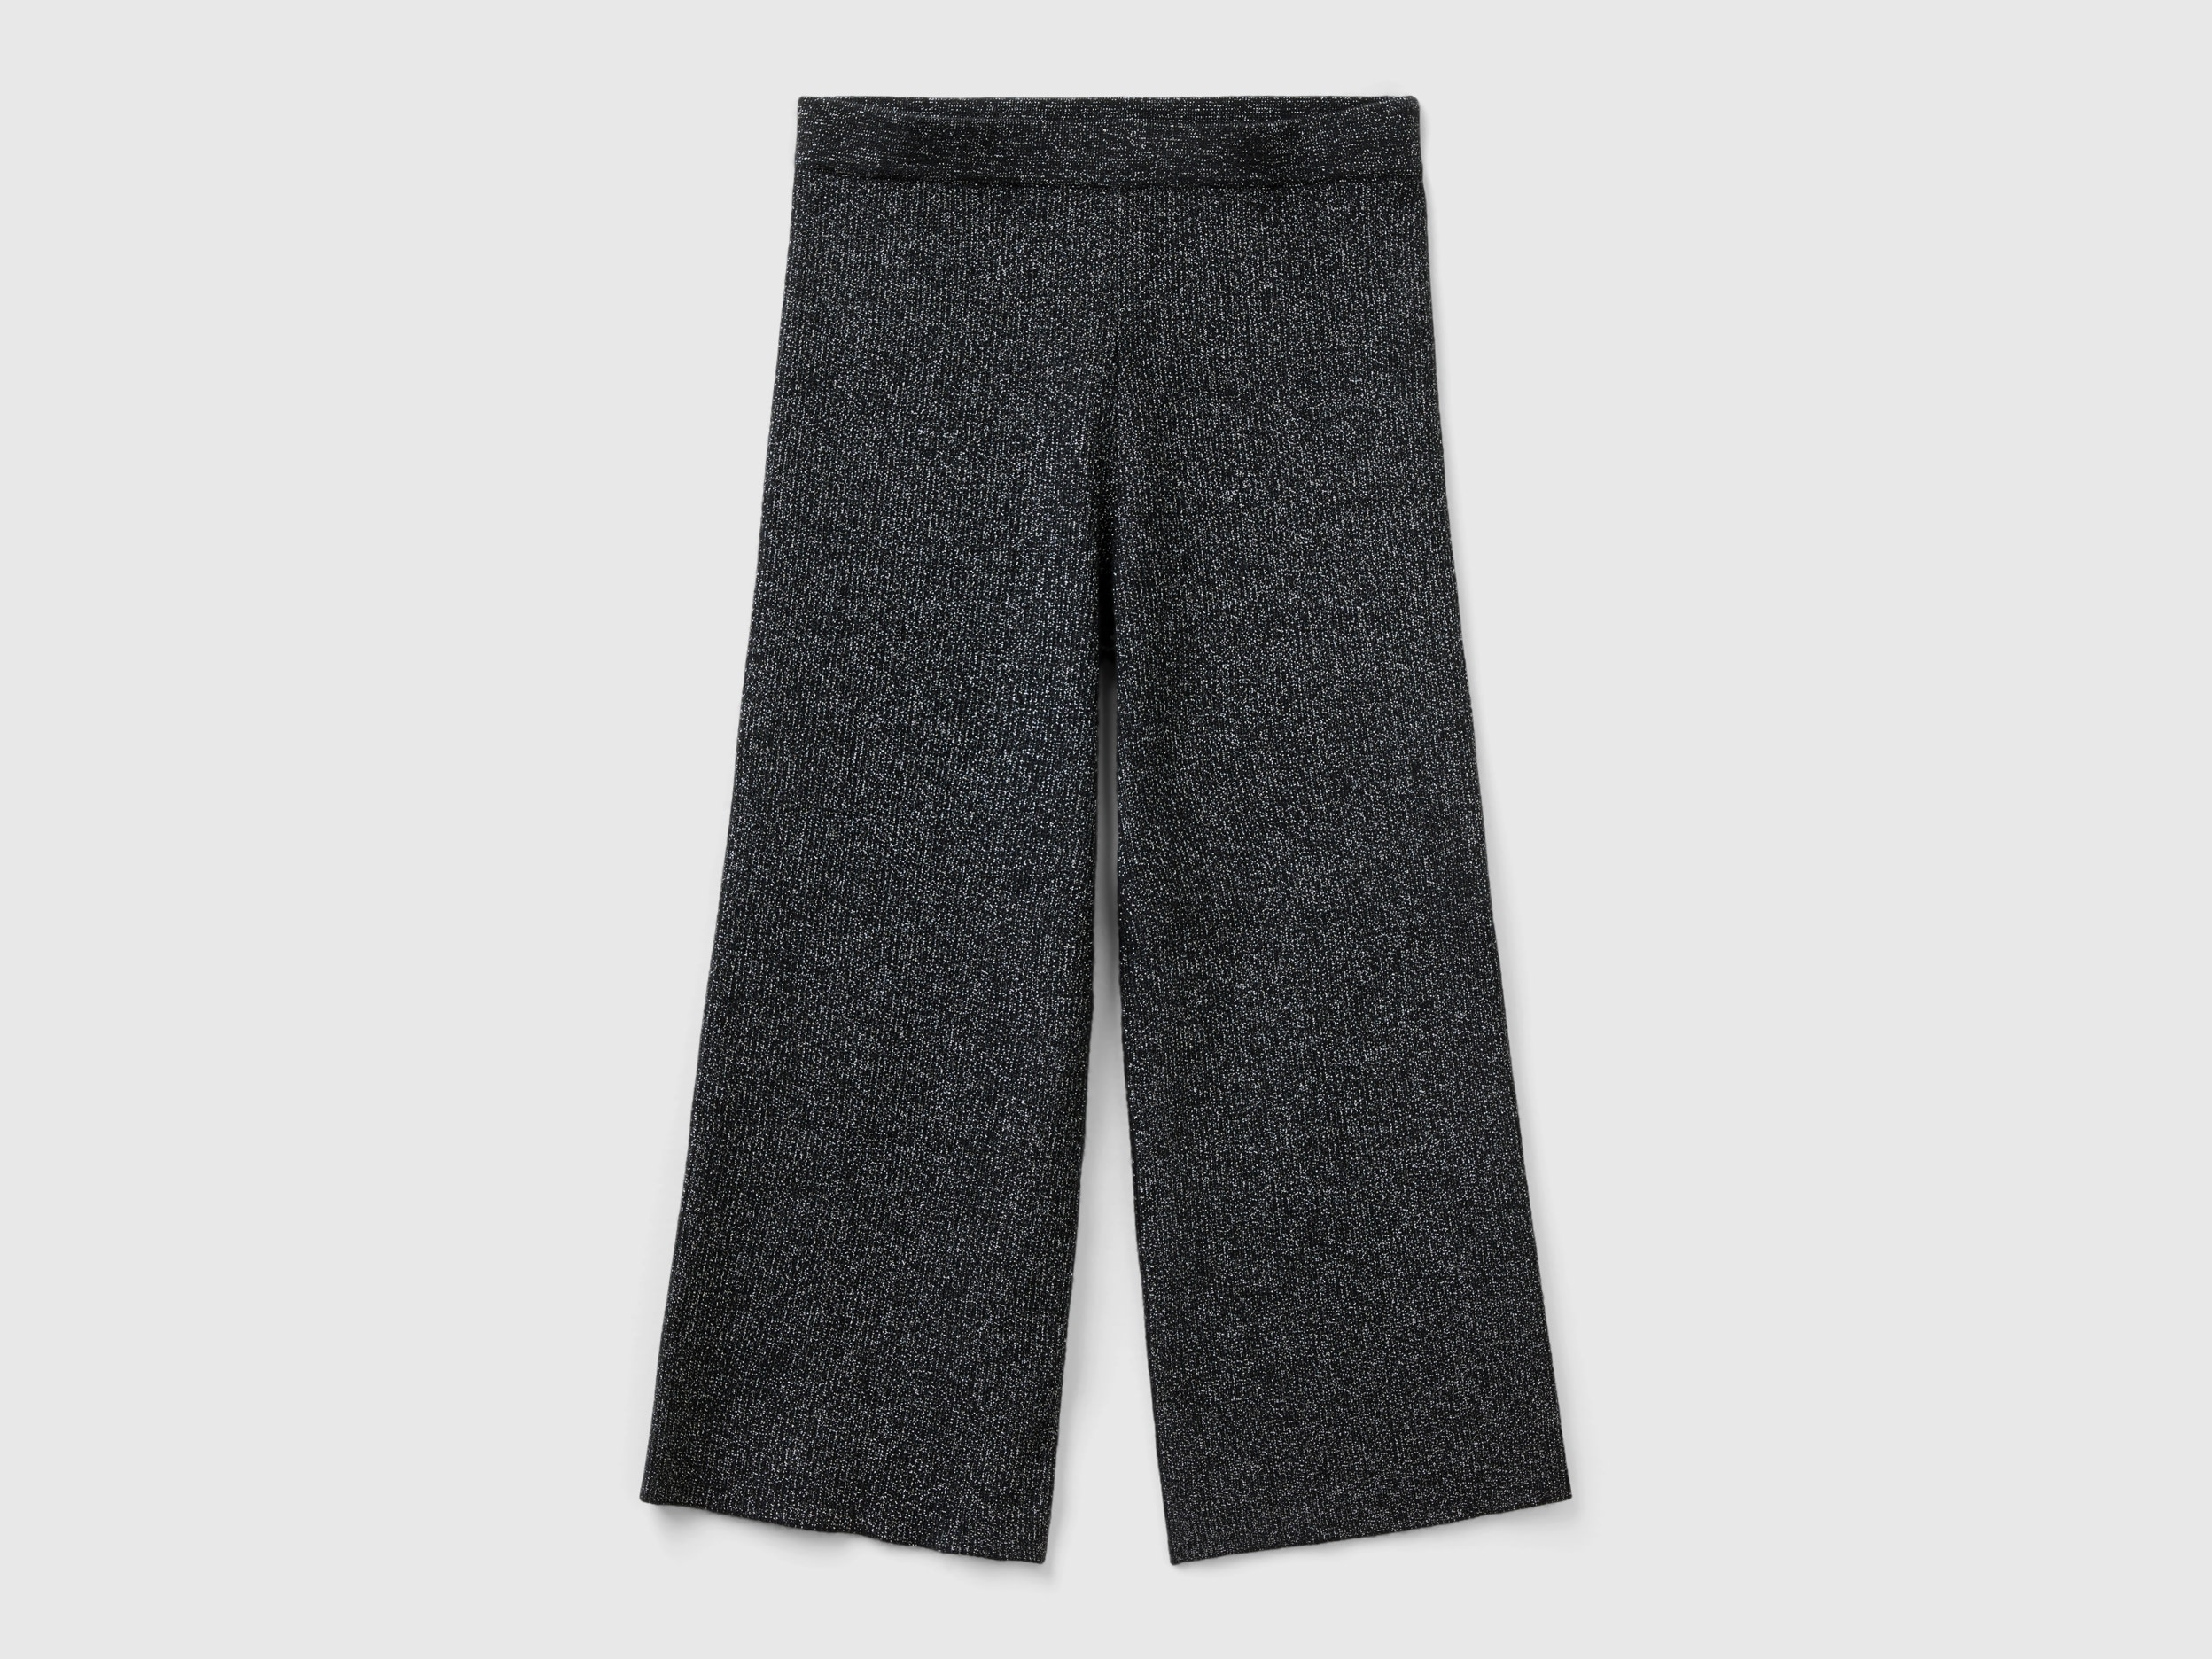 Benetton, Knit Pants With Lurex, size M, Black, Kids